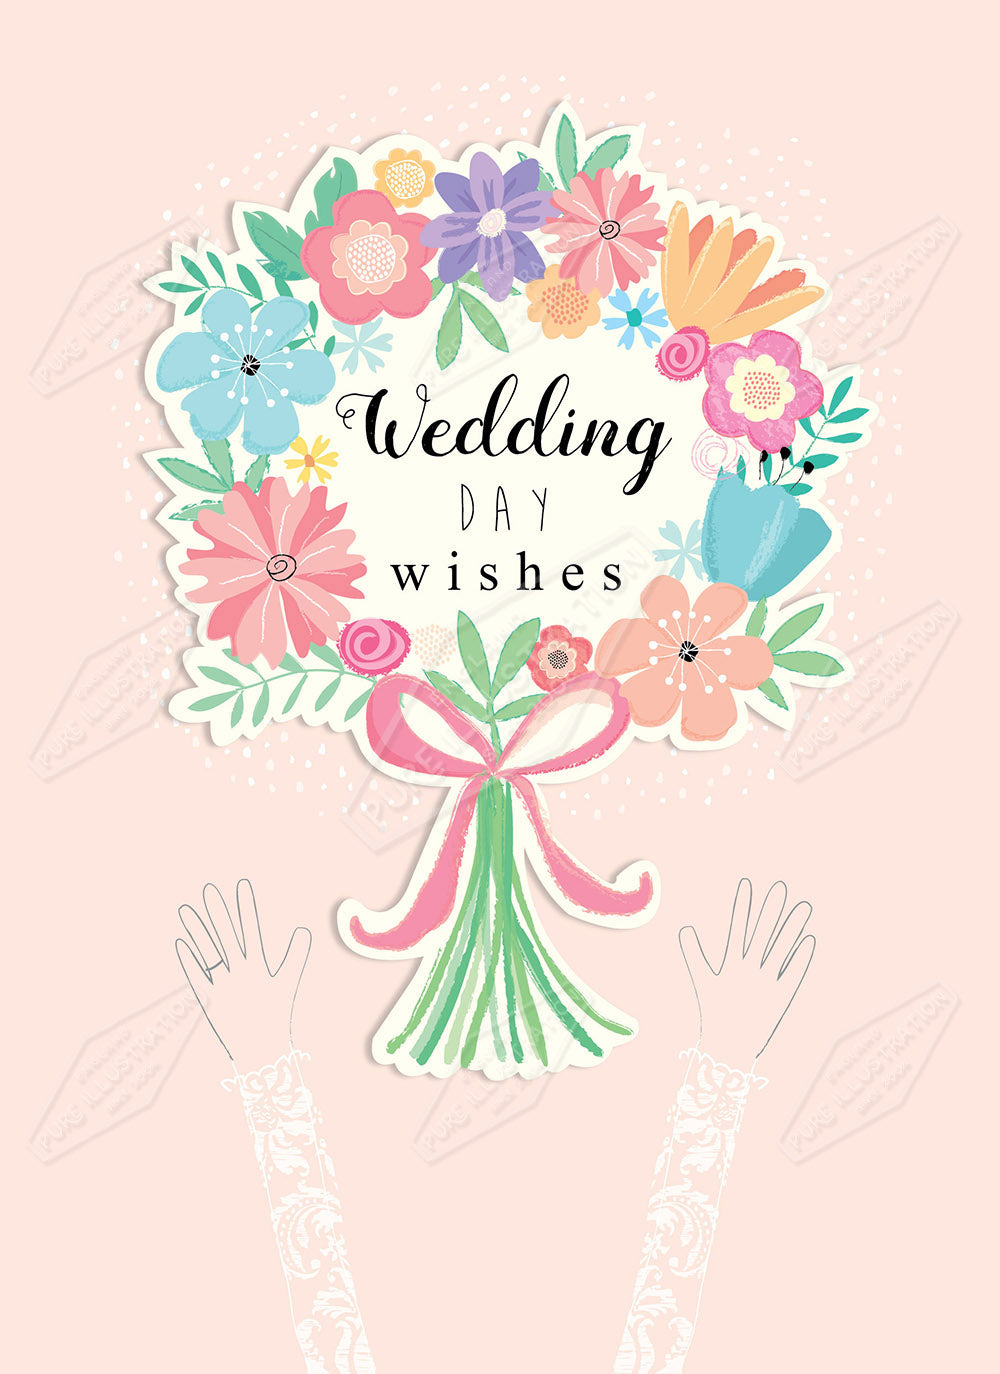 00032536AMC - Amanda McDonough is represented by Pure Art Licensing Agency - Wedding Greeting Card Design